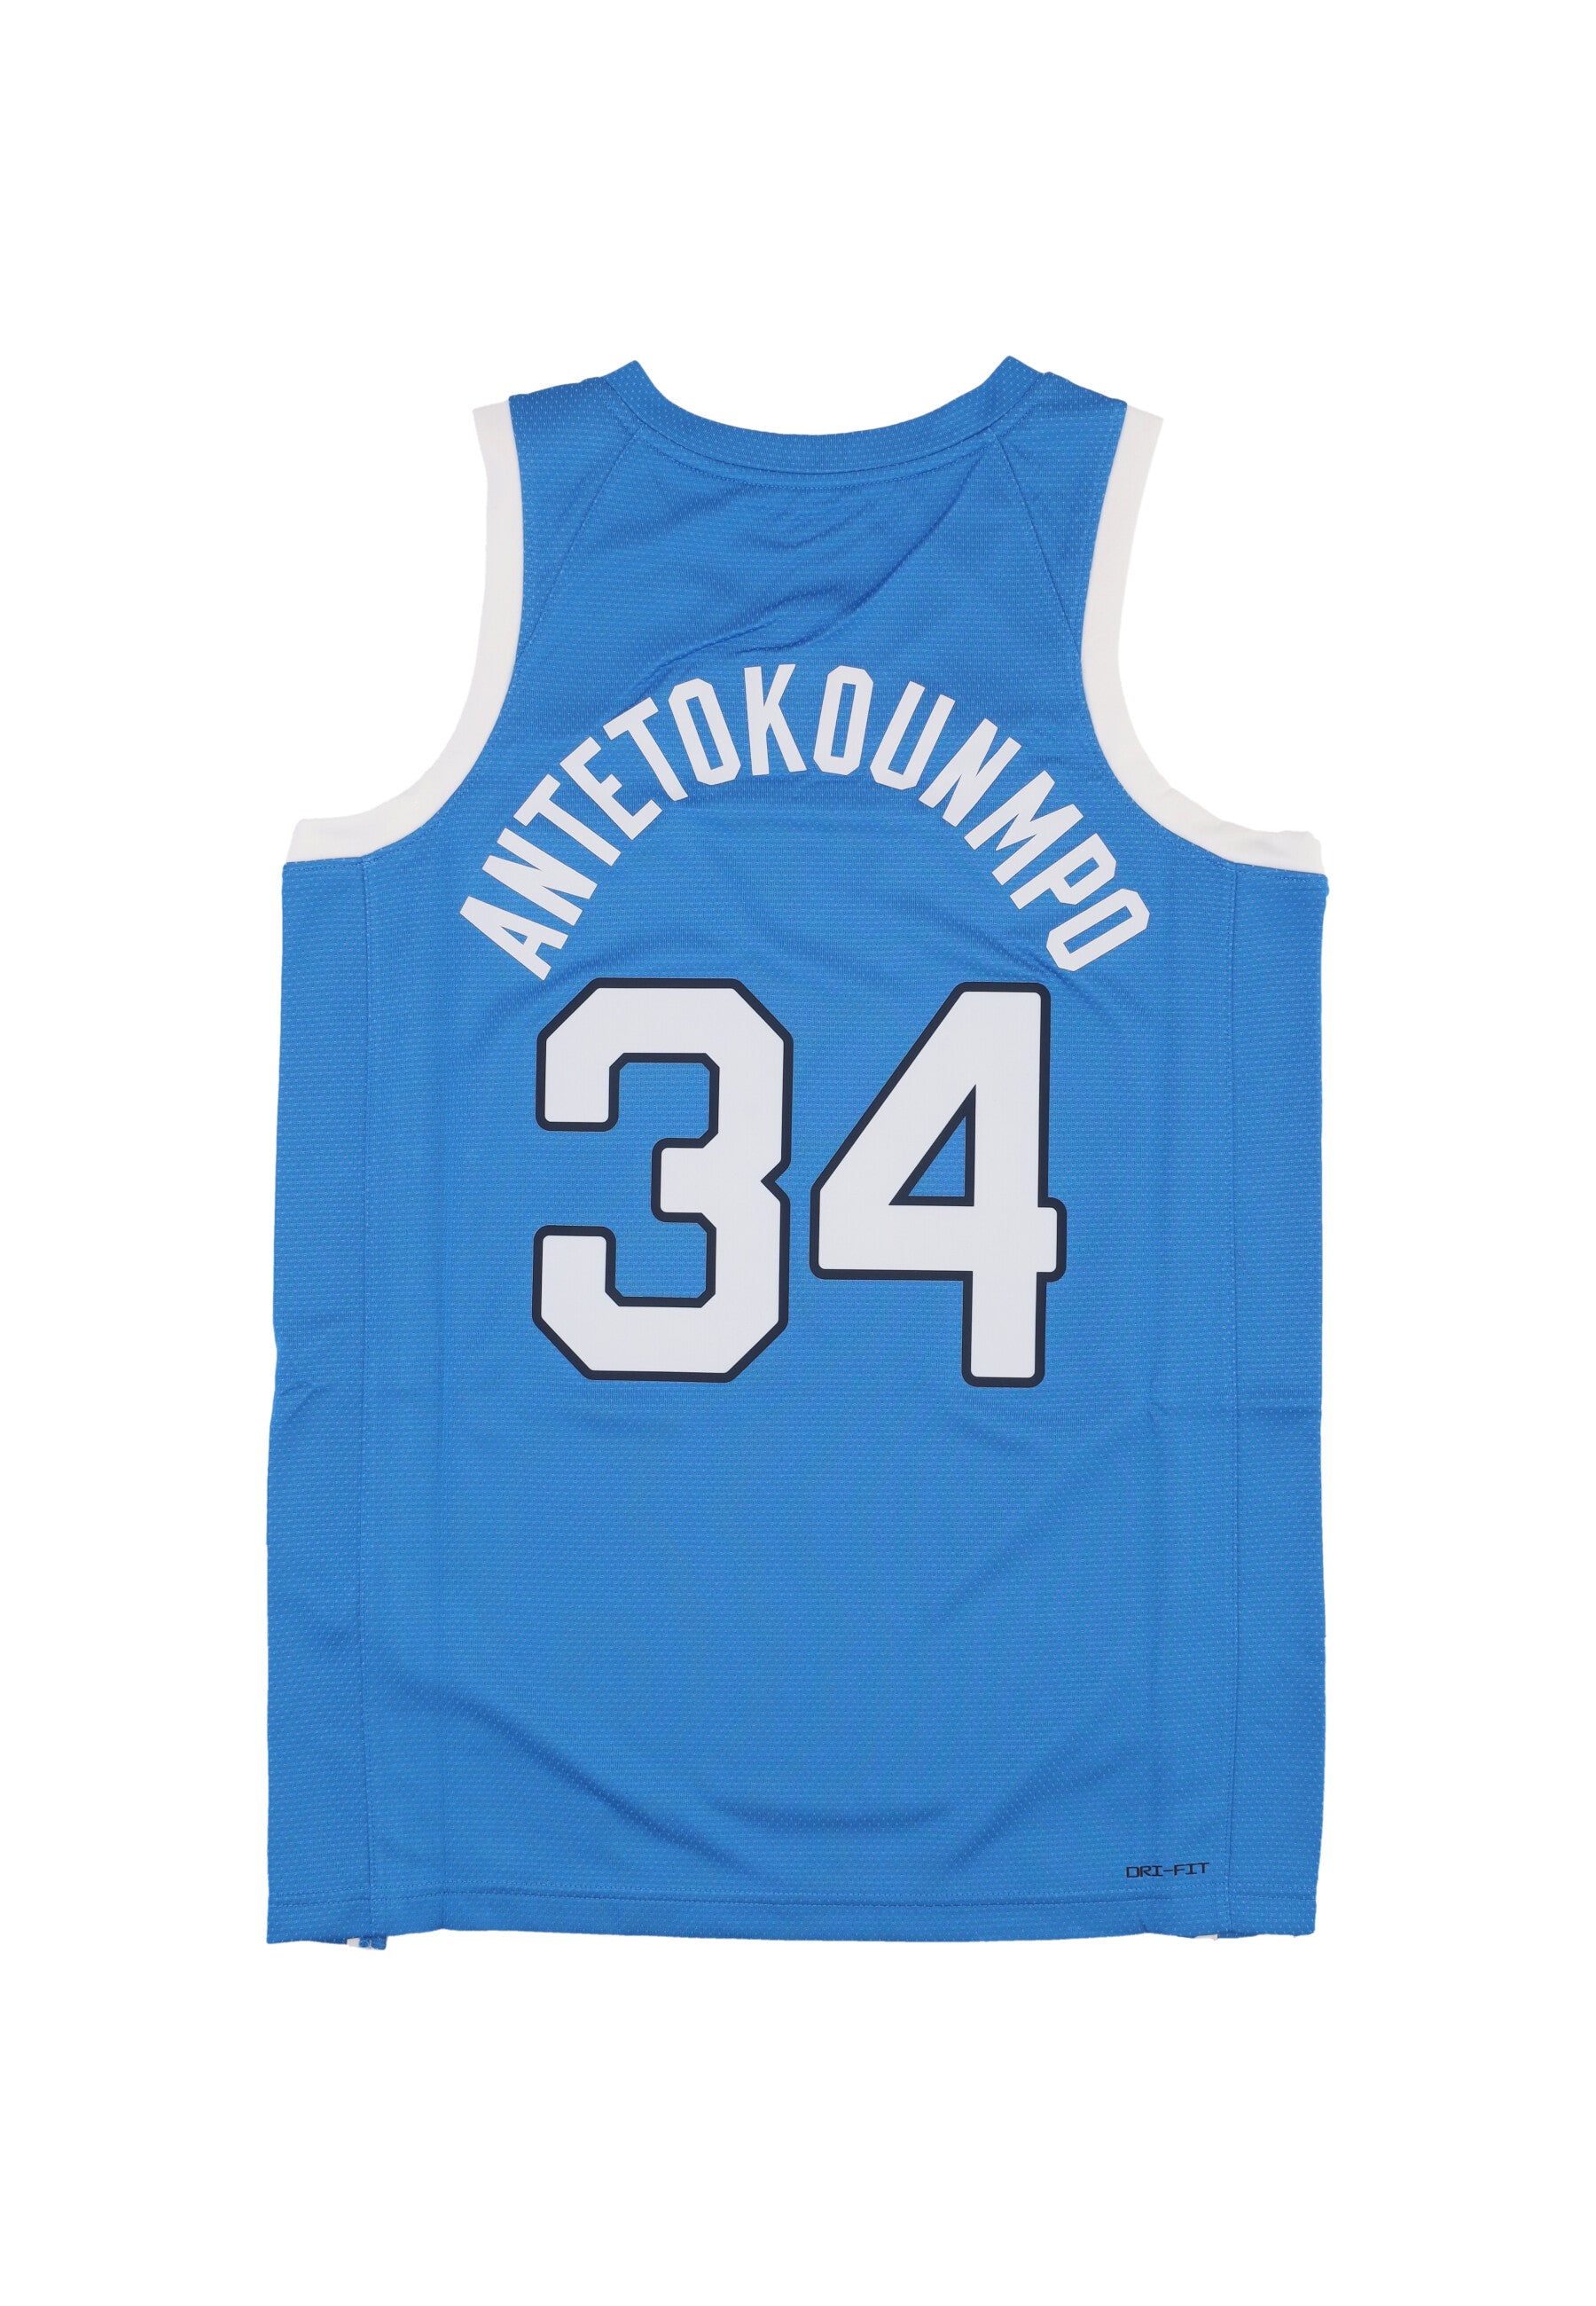 Canotta Basket Uomo Limited Road Jersey No 34 Giannis Antetokounmpo Team Greece Lt Photo Blue/white HF5495-435